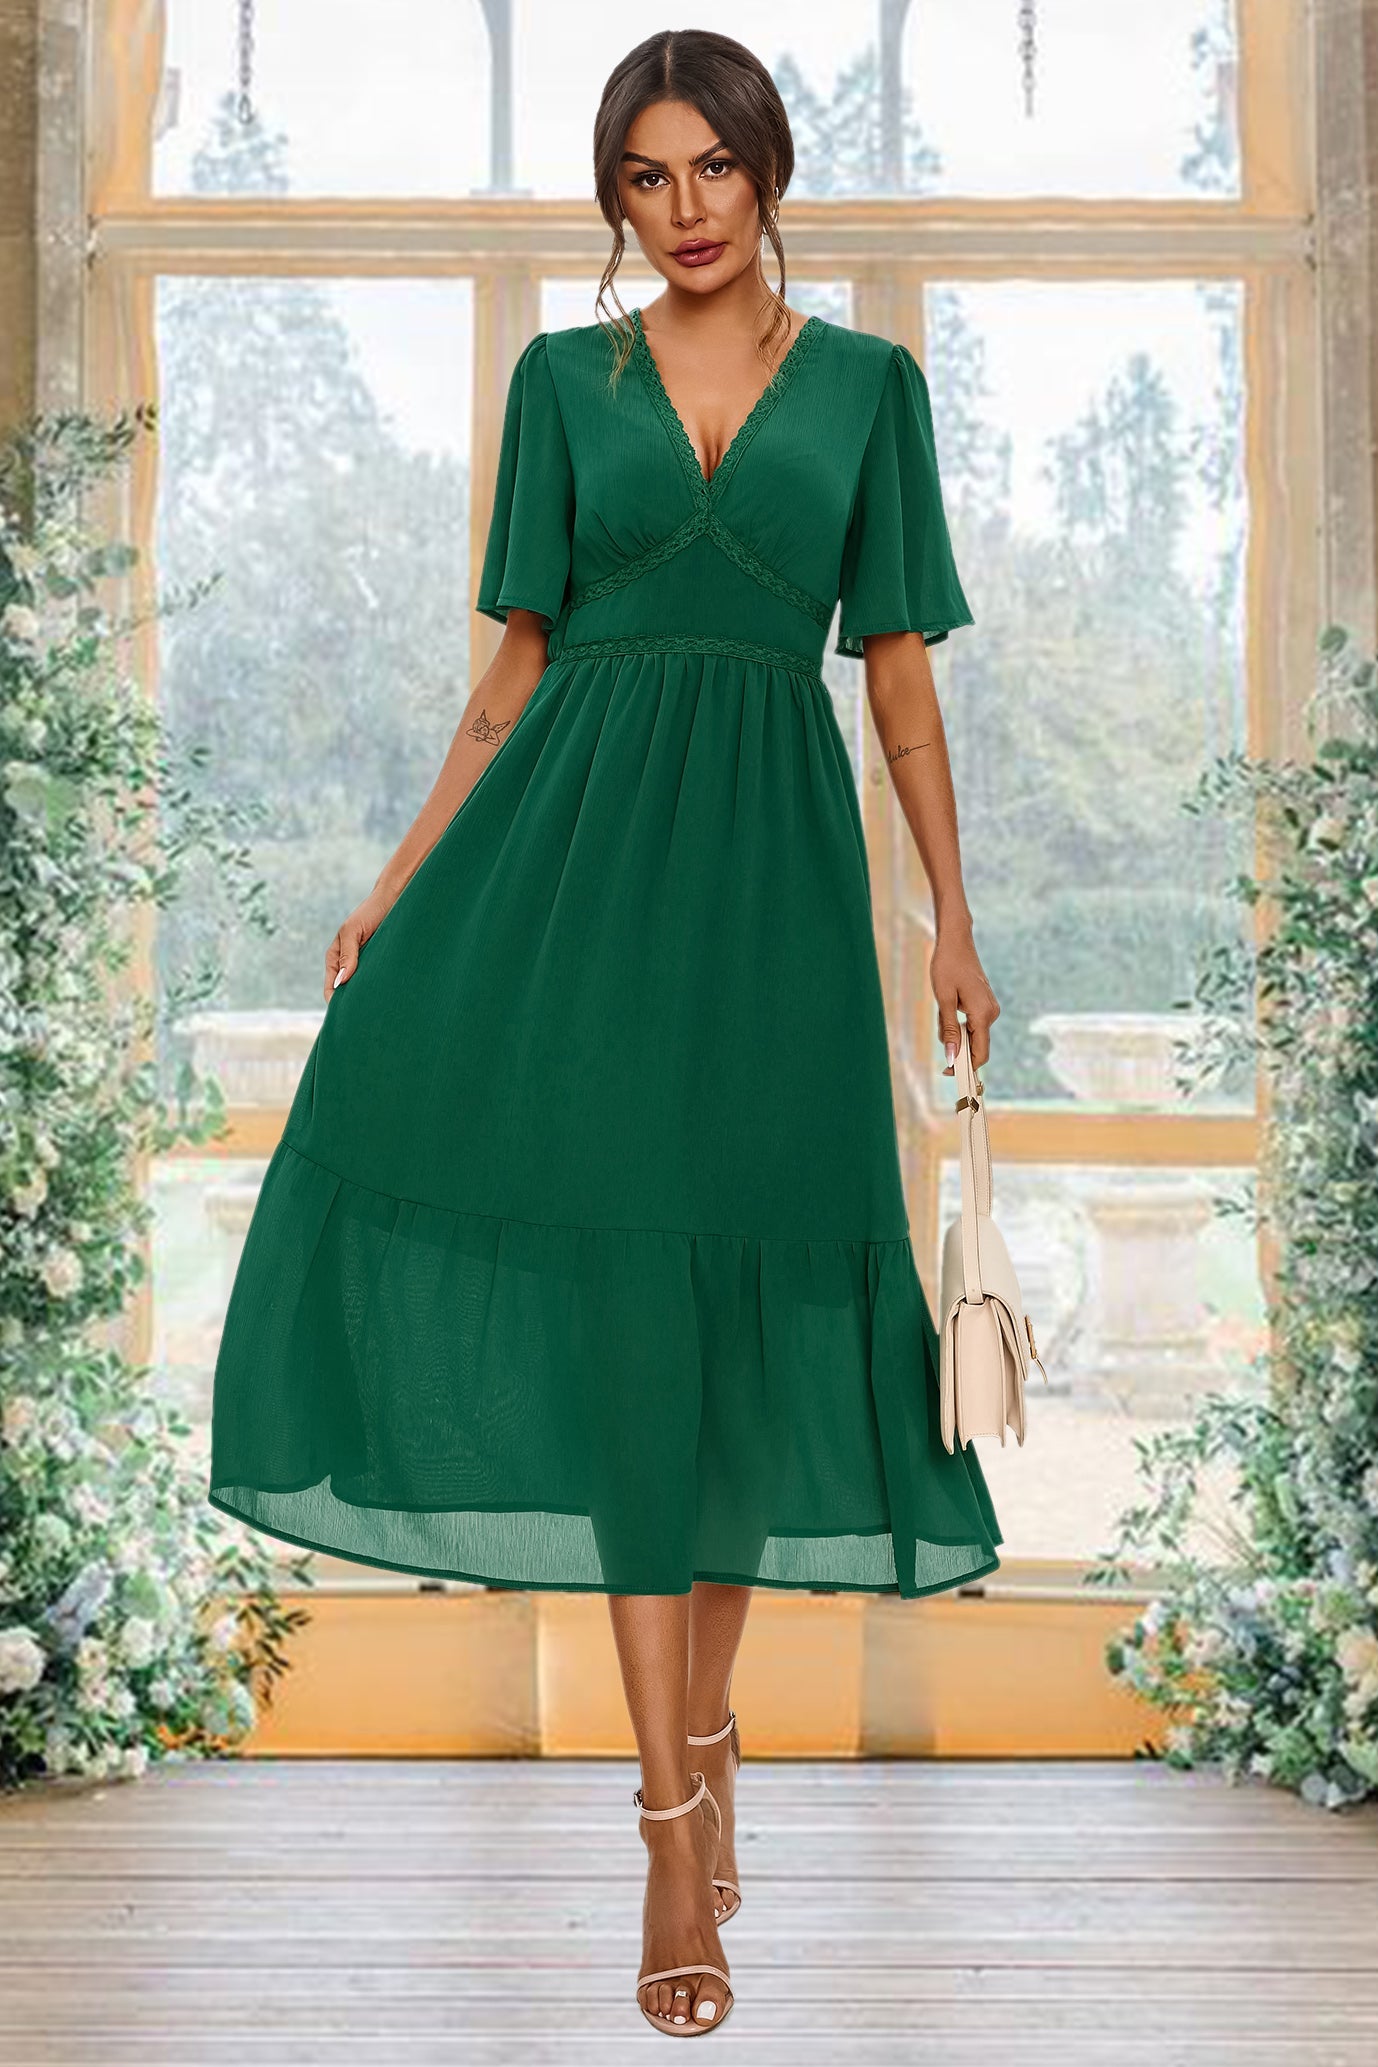 Lace Trim Deep V Neck Angel Sleeve Midi Dress In Green FS661-Green